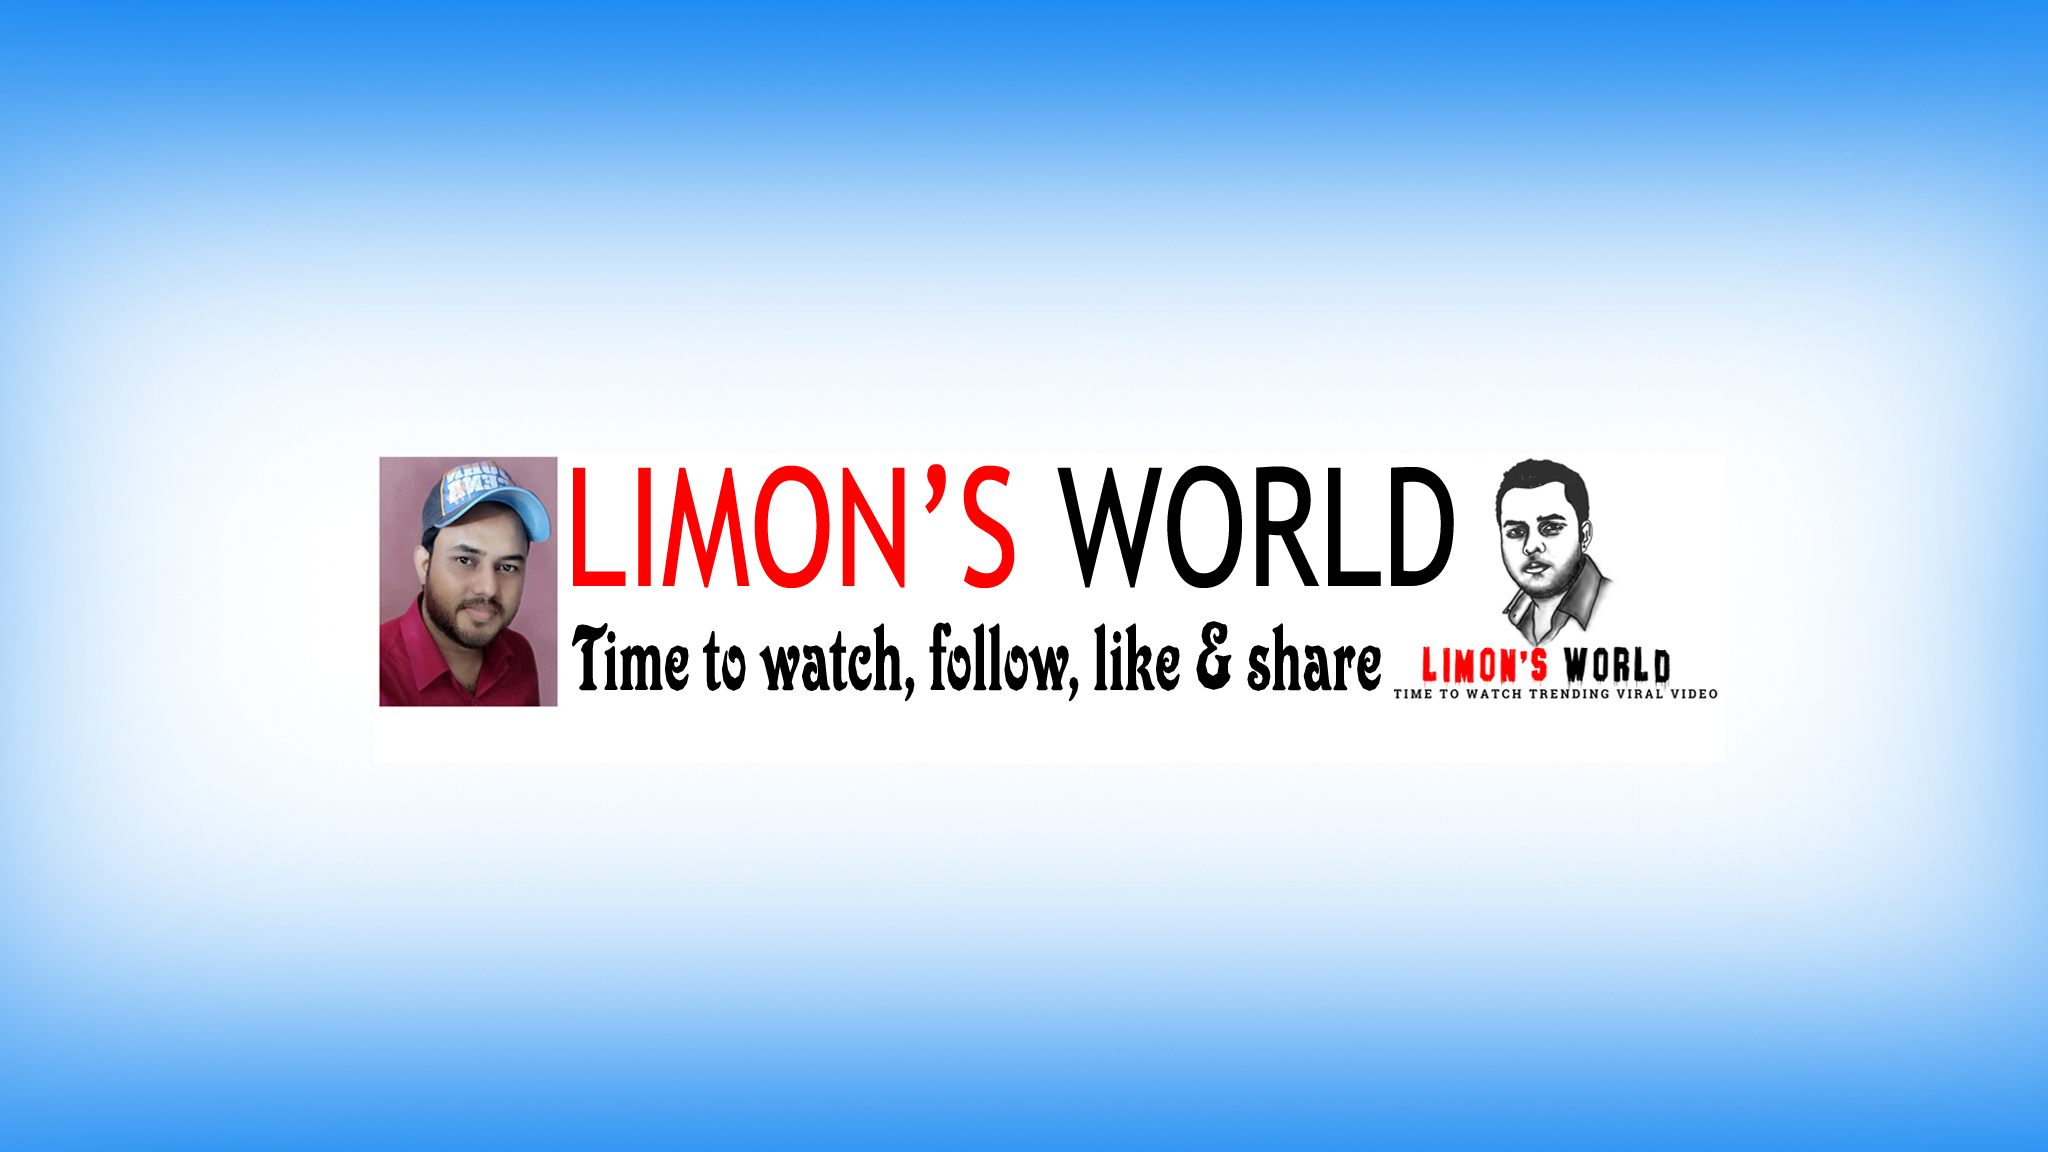 LIMON'S WORLD